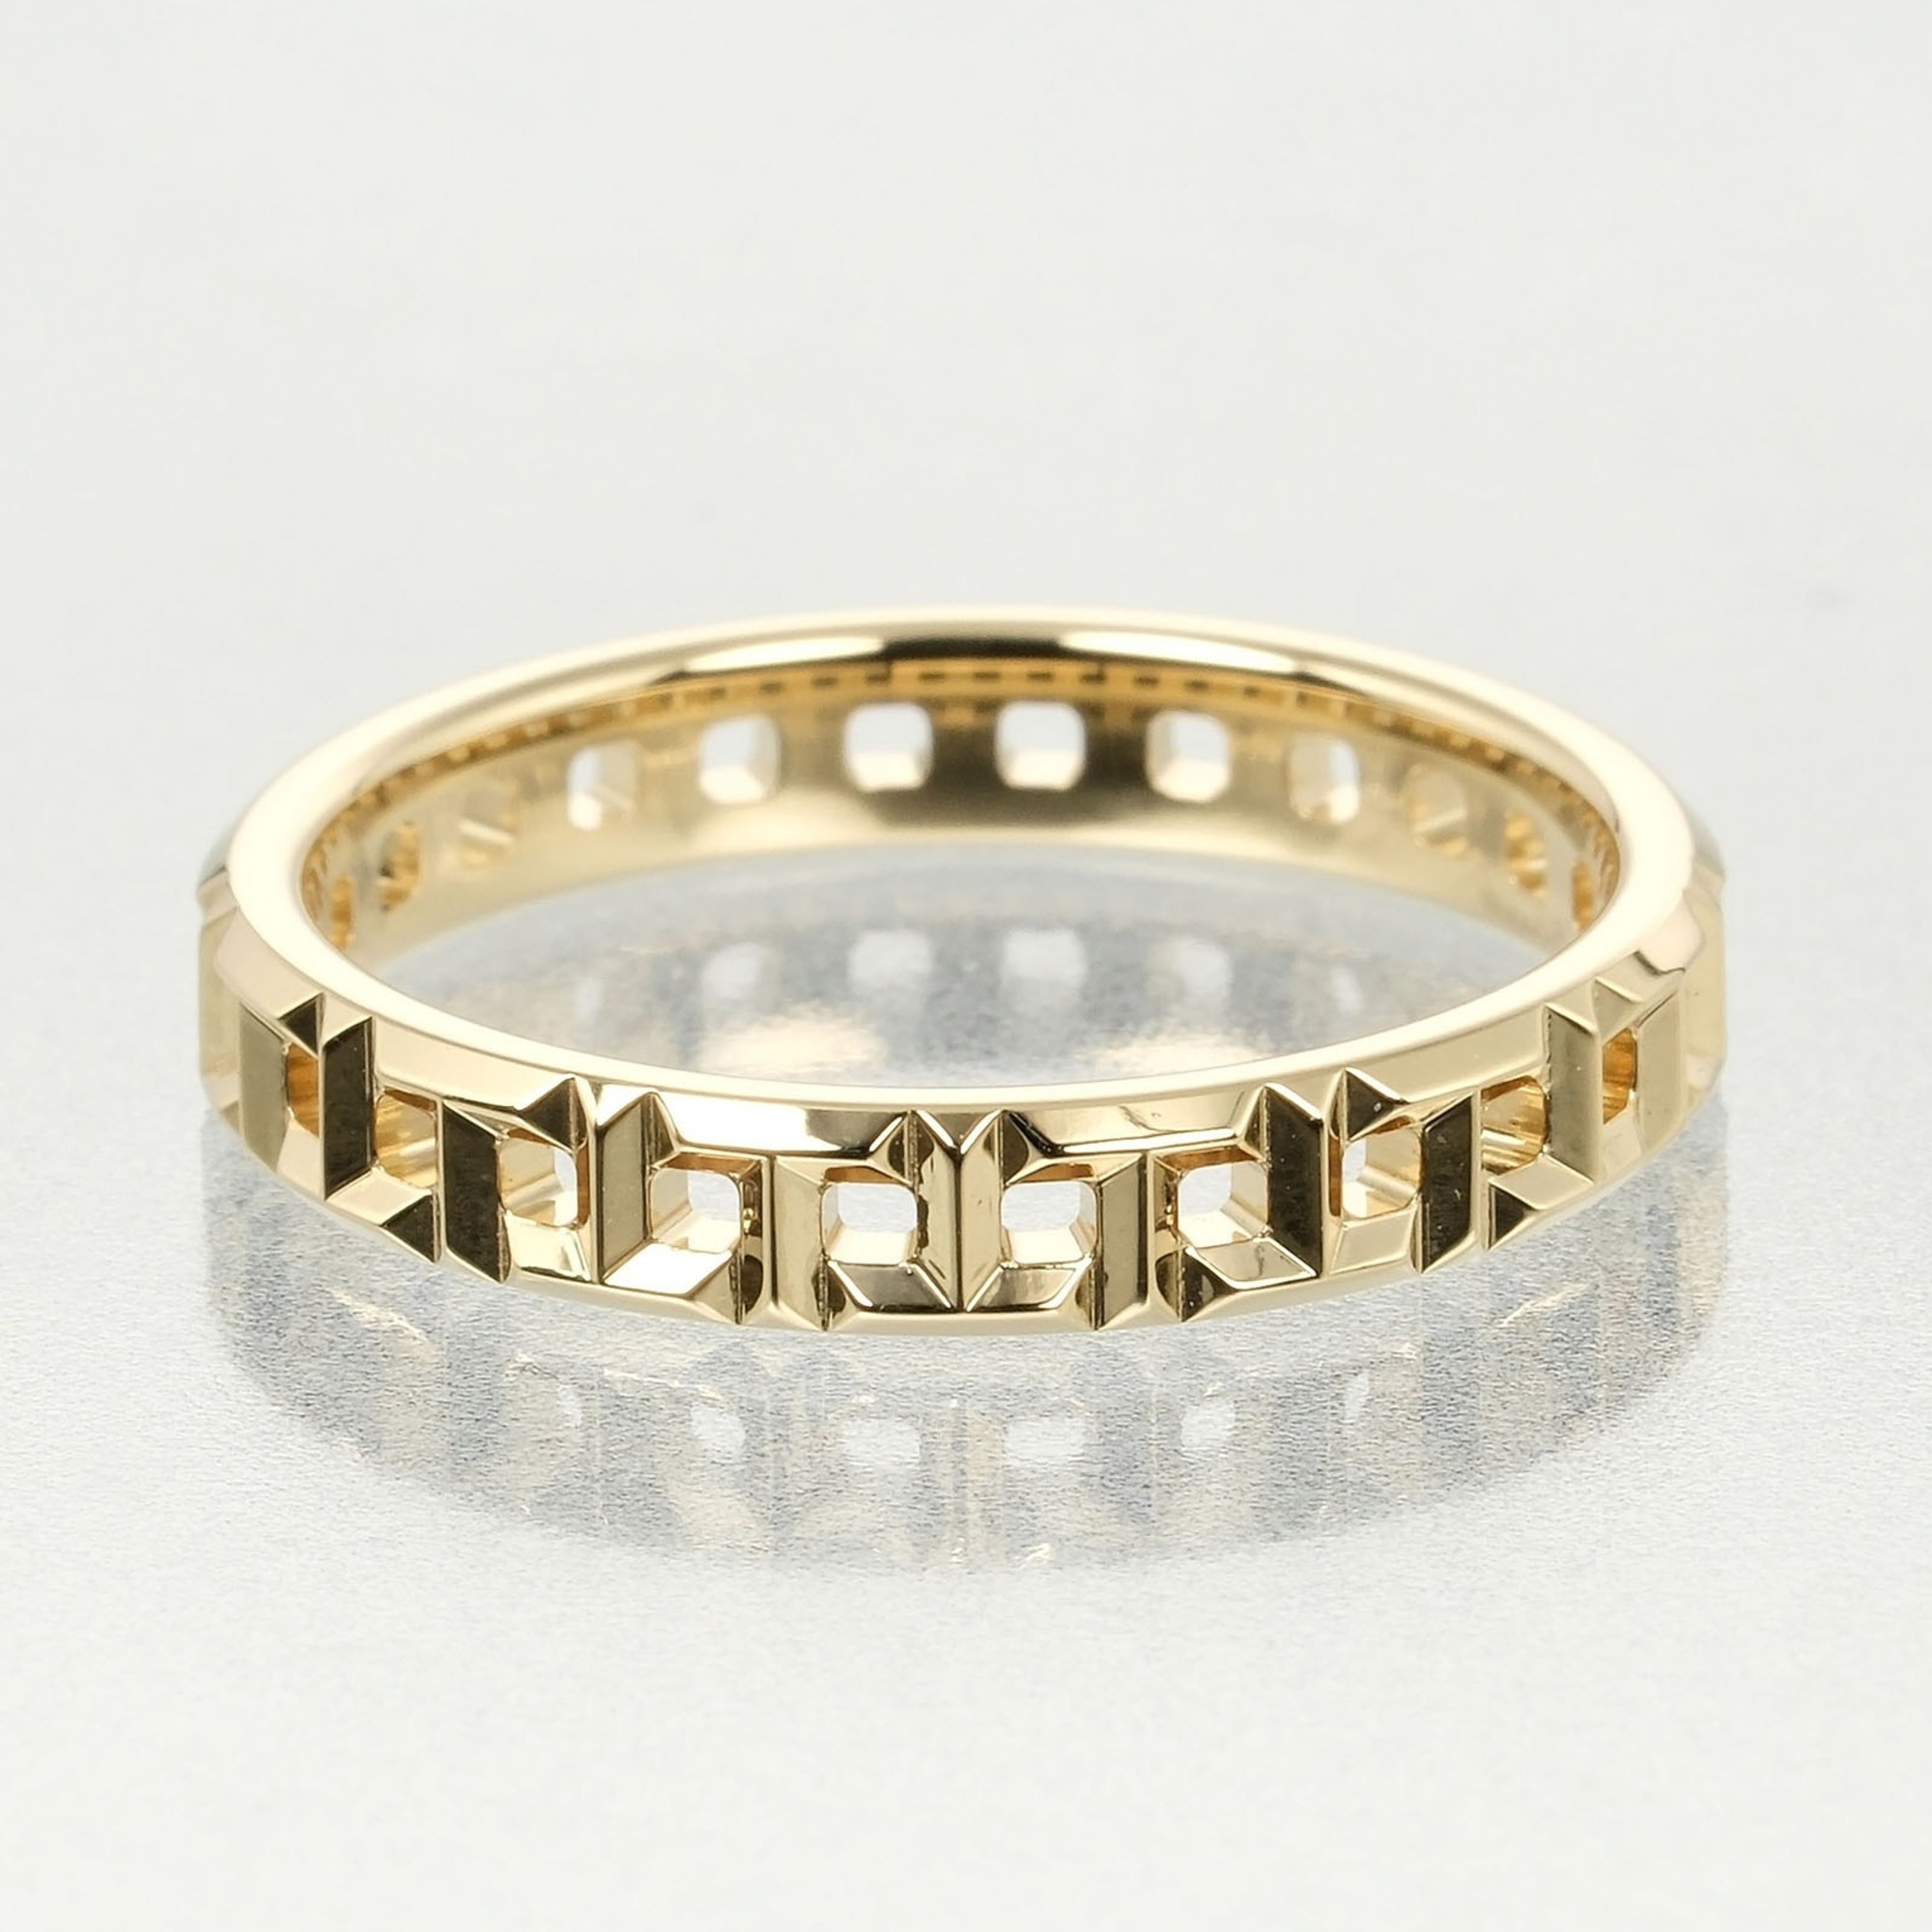 Tiffany & Co. T True Narrow Ring, Size 16, 3.5mm, K18 YG, Yellow Gold, Approx. 3.9g, I132124022